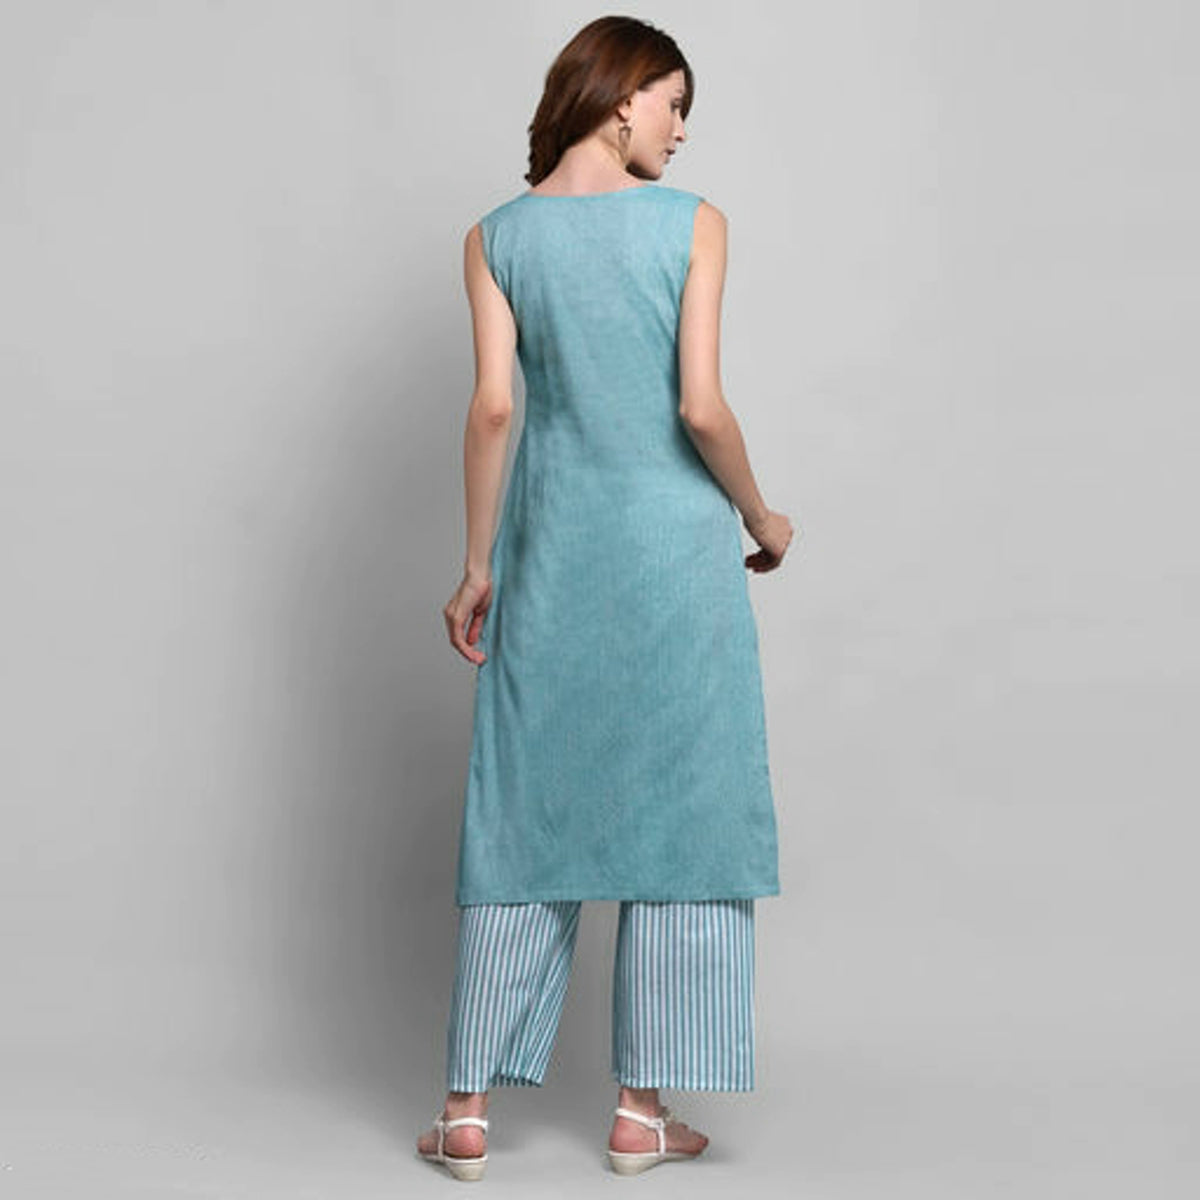 Buy Sleeveless Kurti, Kurta Women, Yellow & Grey Floral Printe Kurti for  Women, Gift for Her Machine-wash, Indian Dress, Plus Size Kurta, Ethnic  Online in India - Etsy